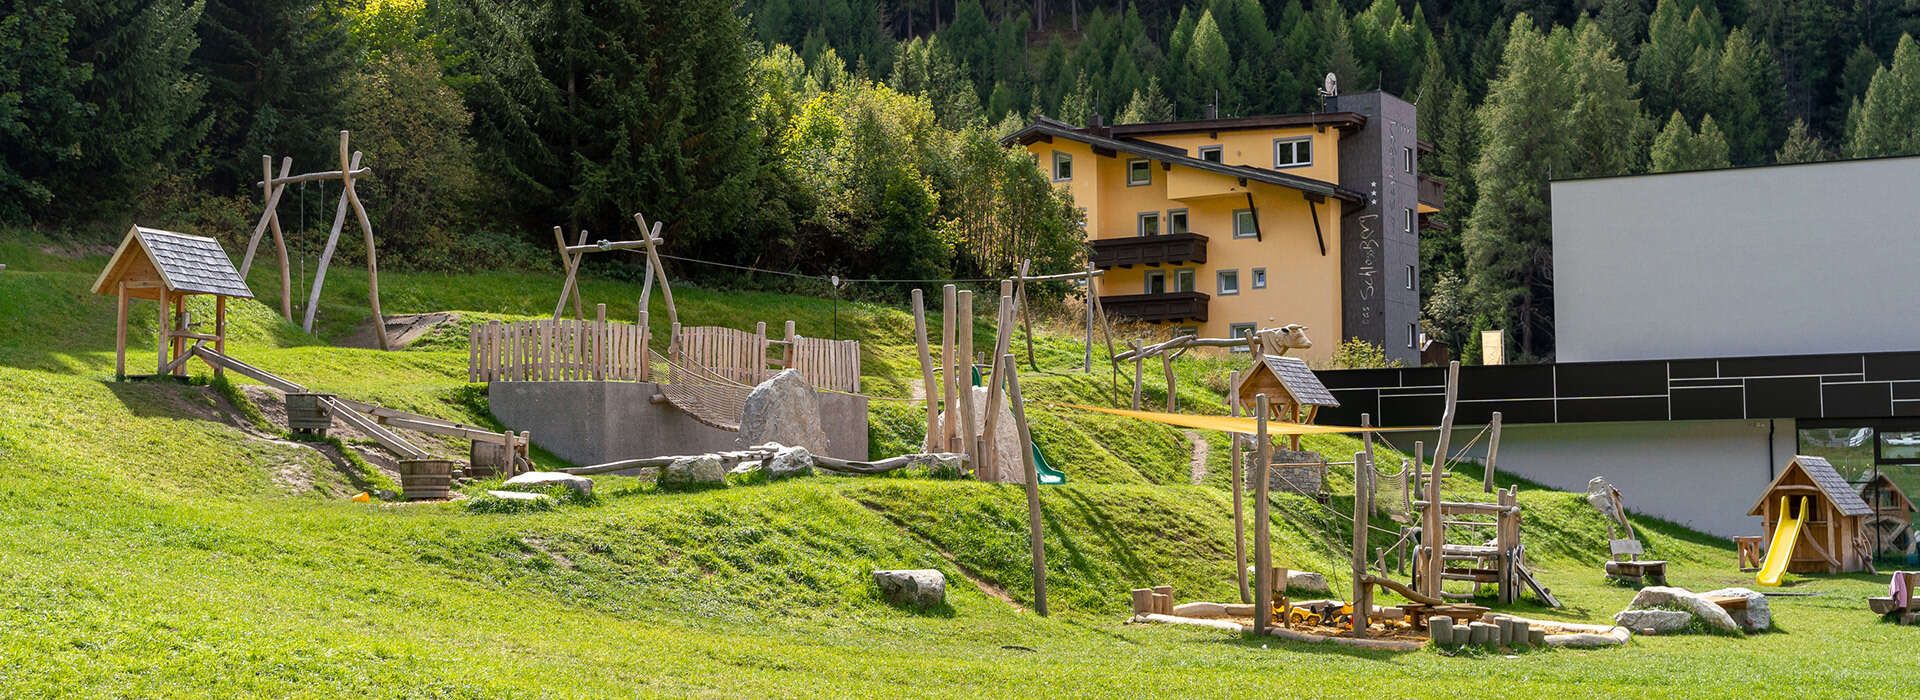 Playground from the Schlossberg Hotel in Nauders Tirol